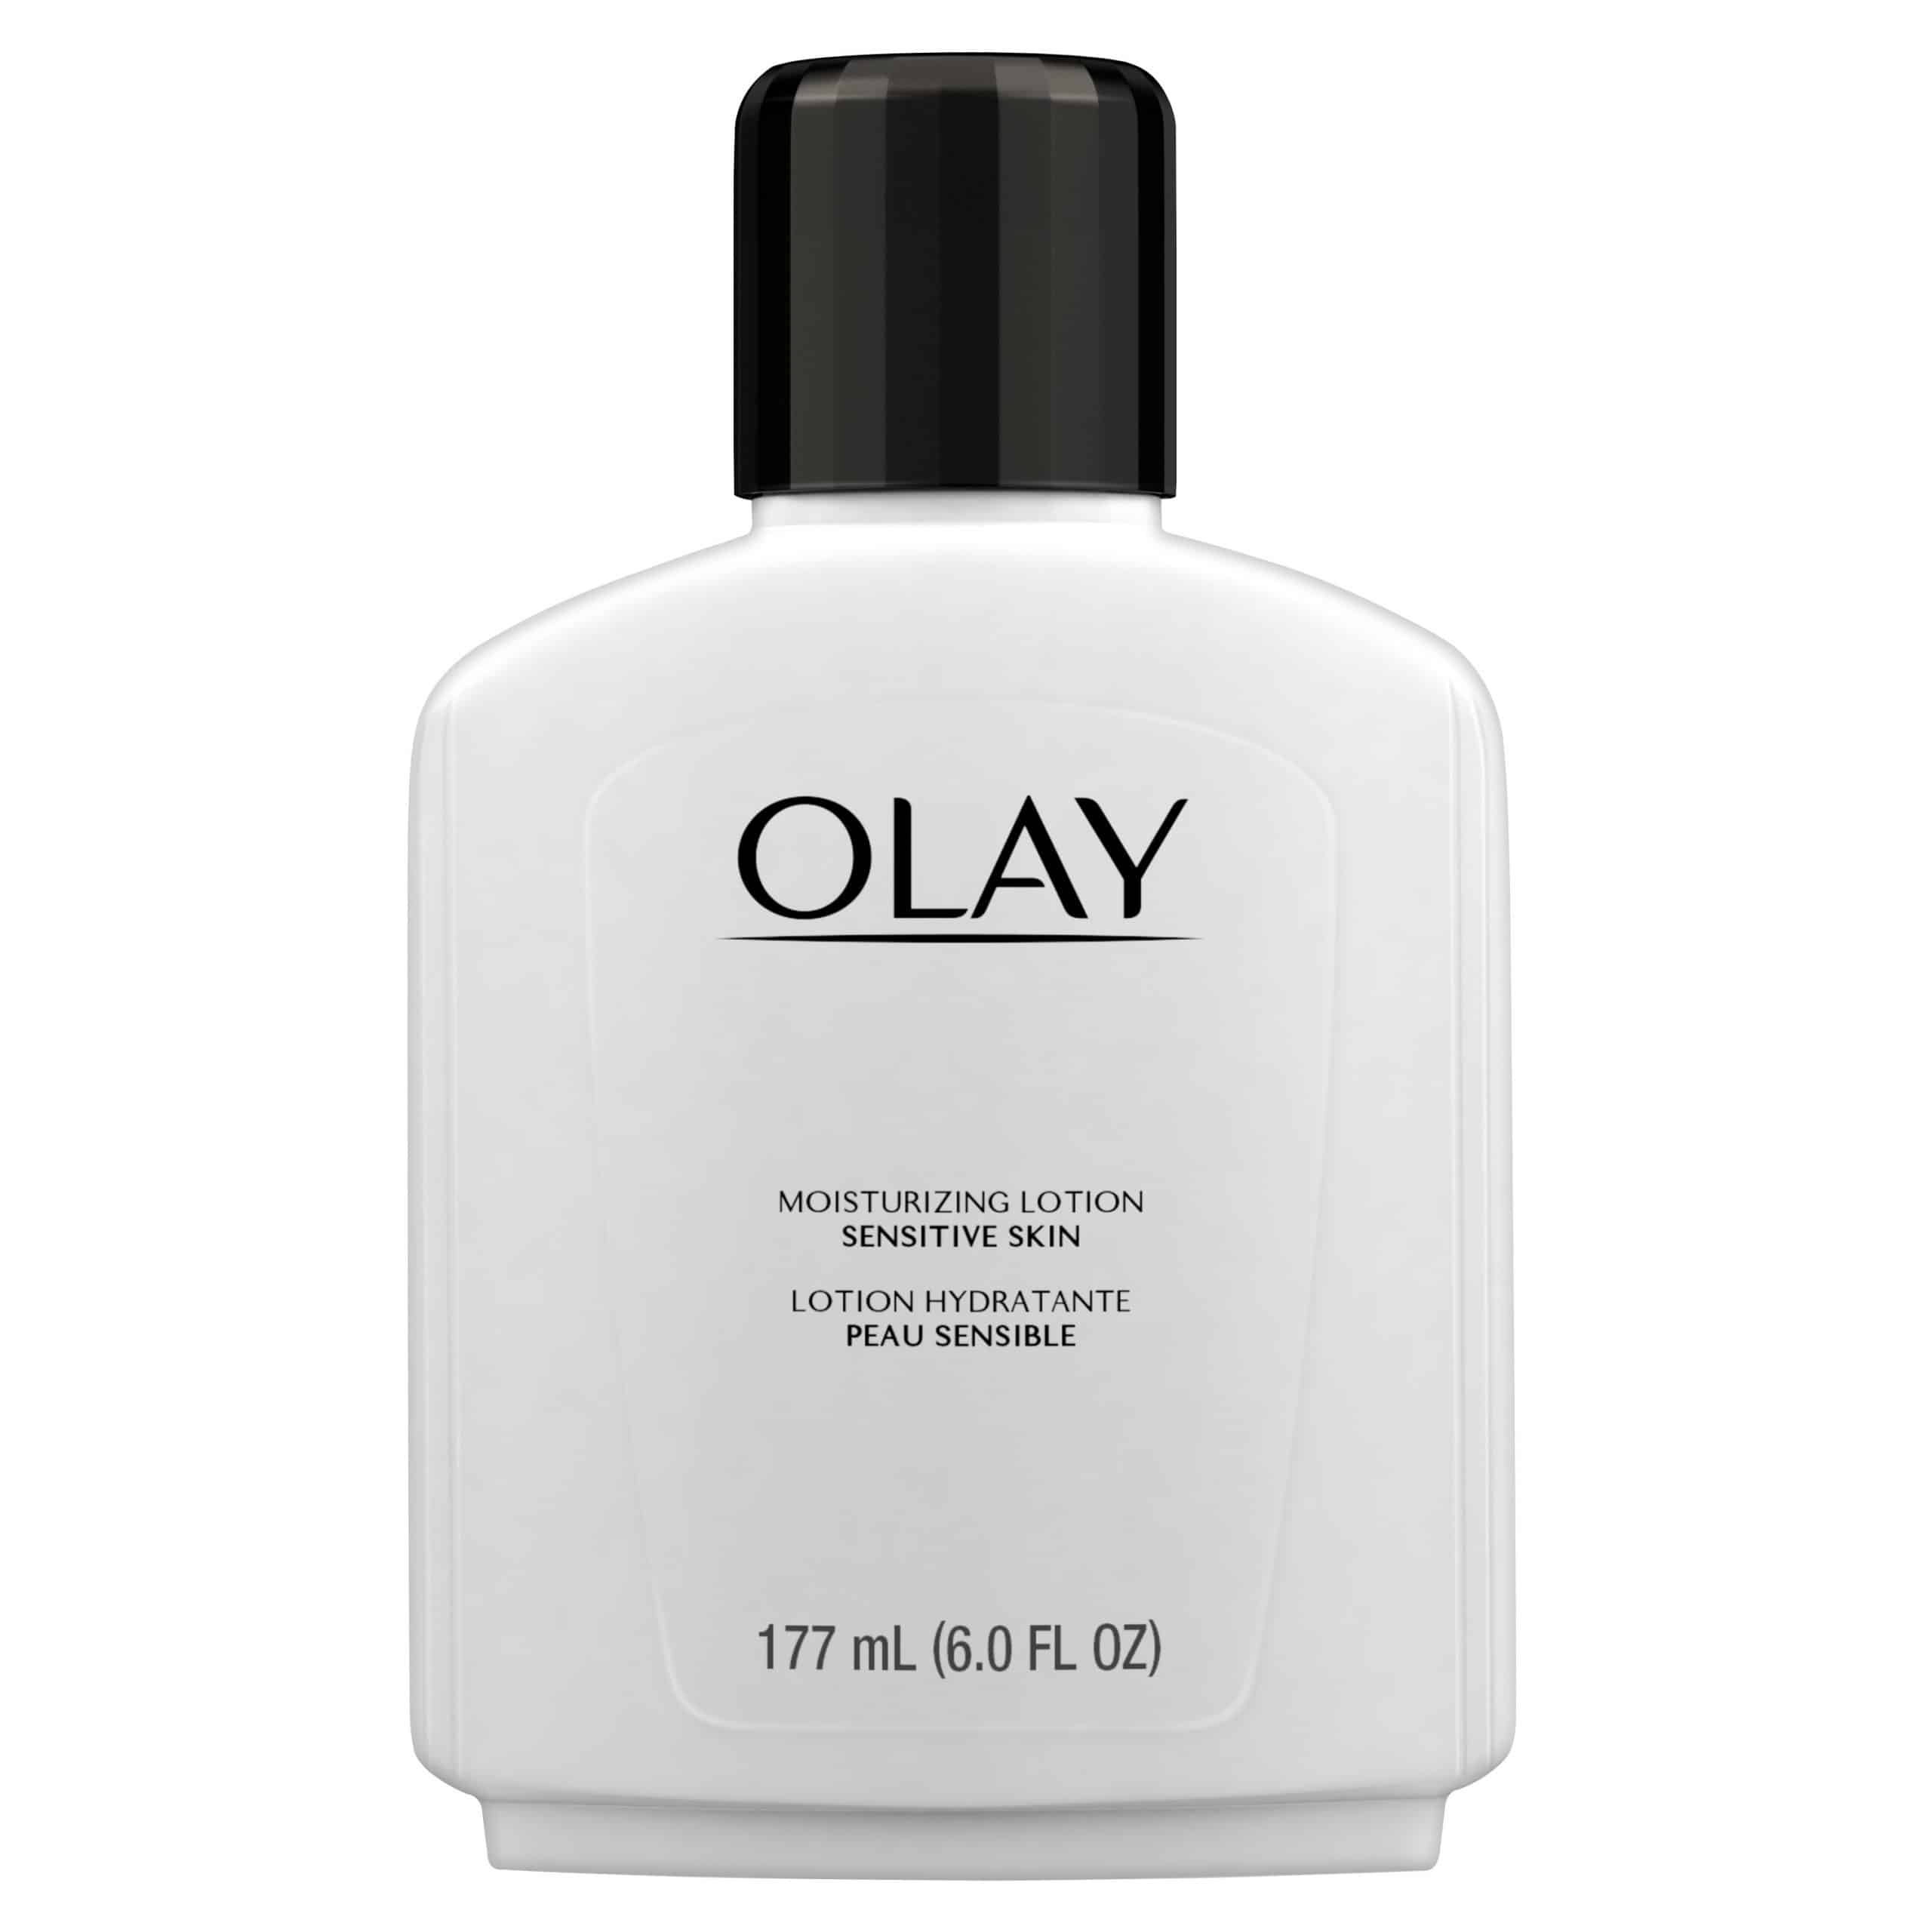 Olay Moisturizing Face Lotion for Sensitive Skin, 6.0 fl oz